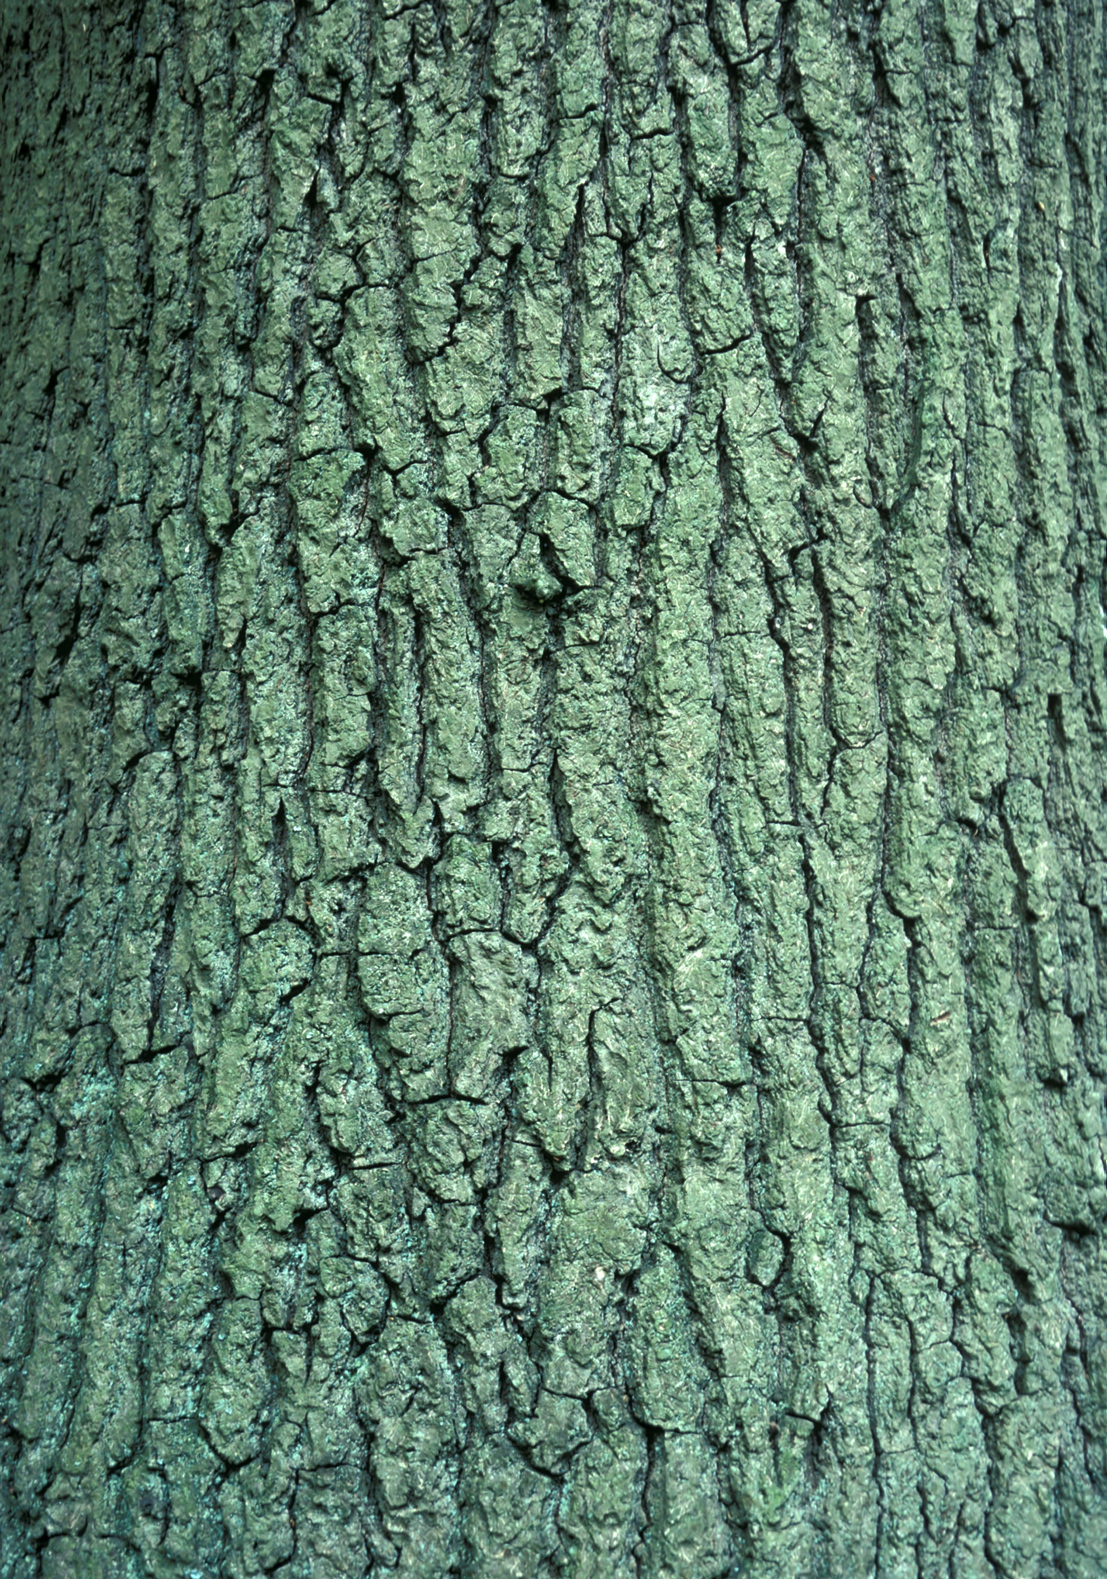 The bark of a mature pedunculate oak (Quercus robur).